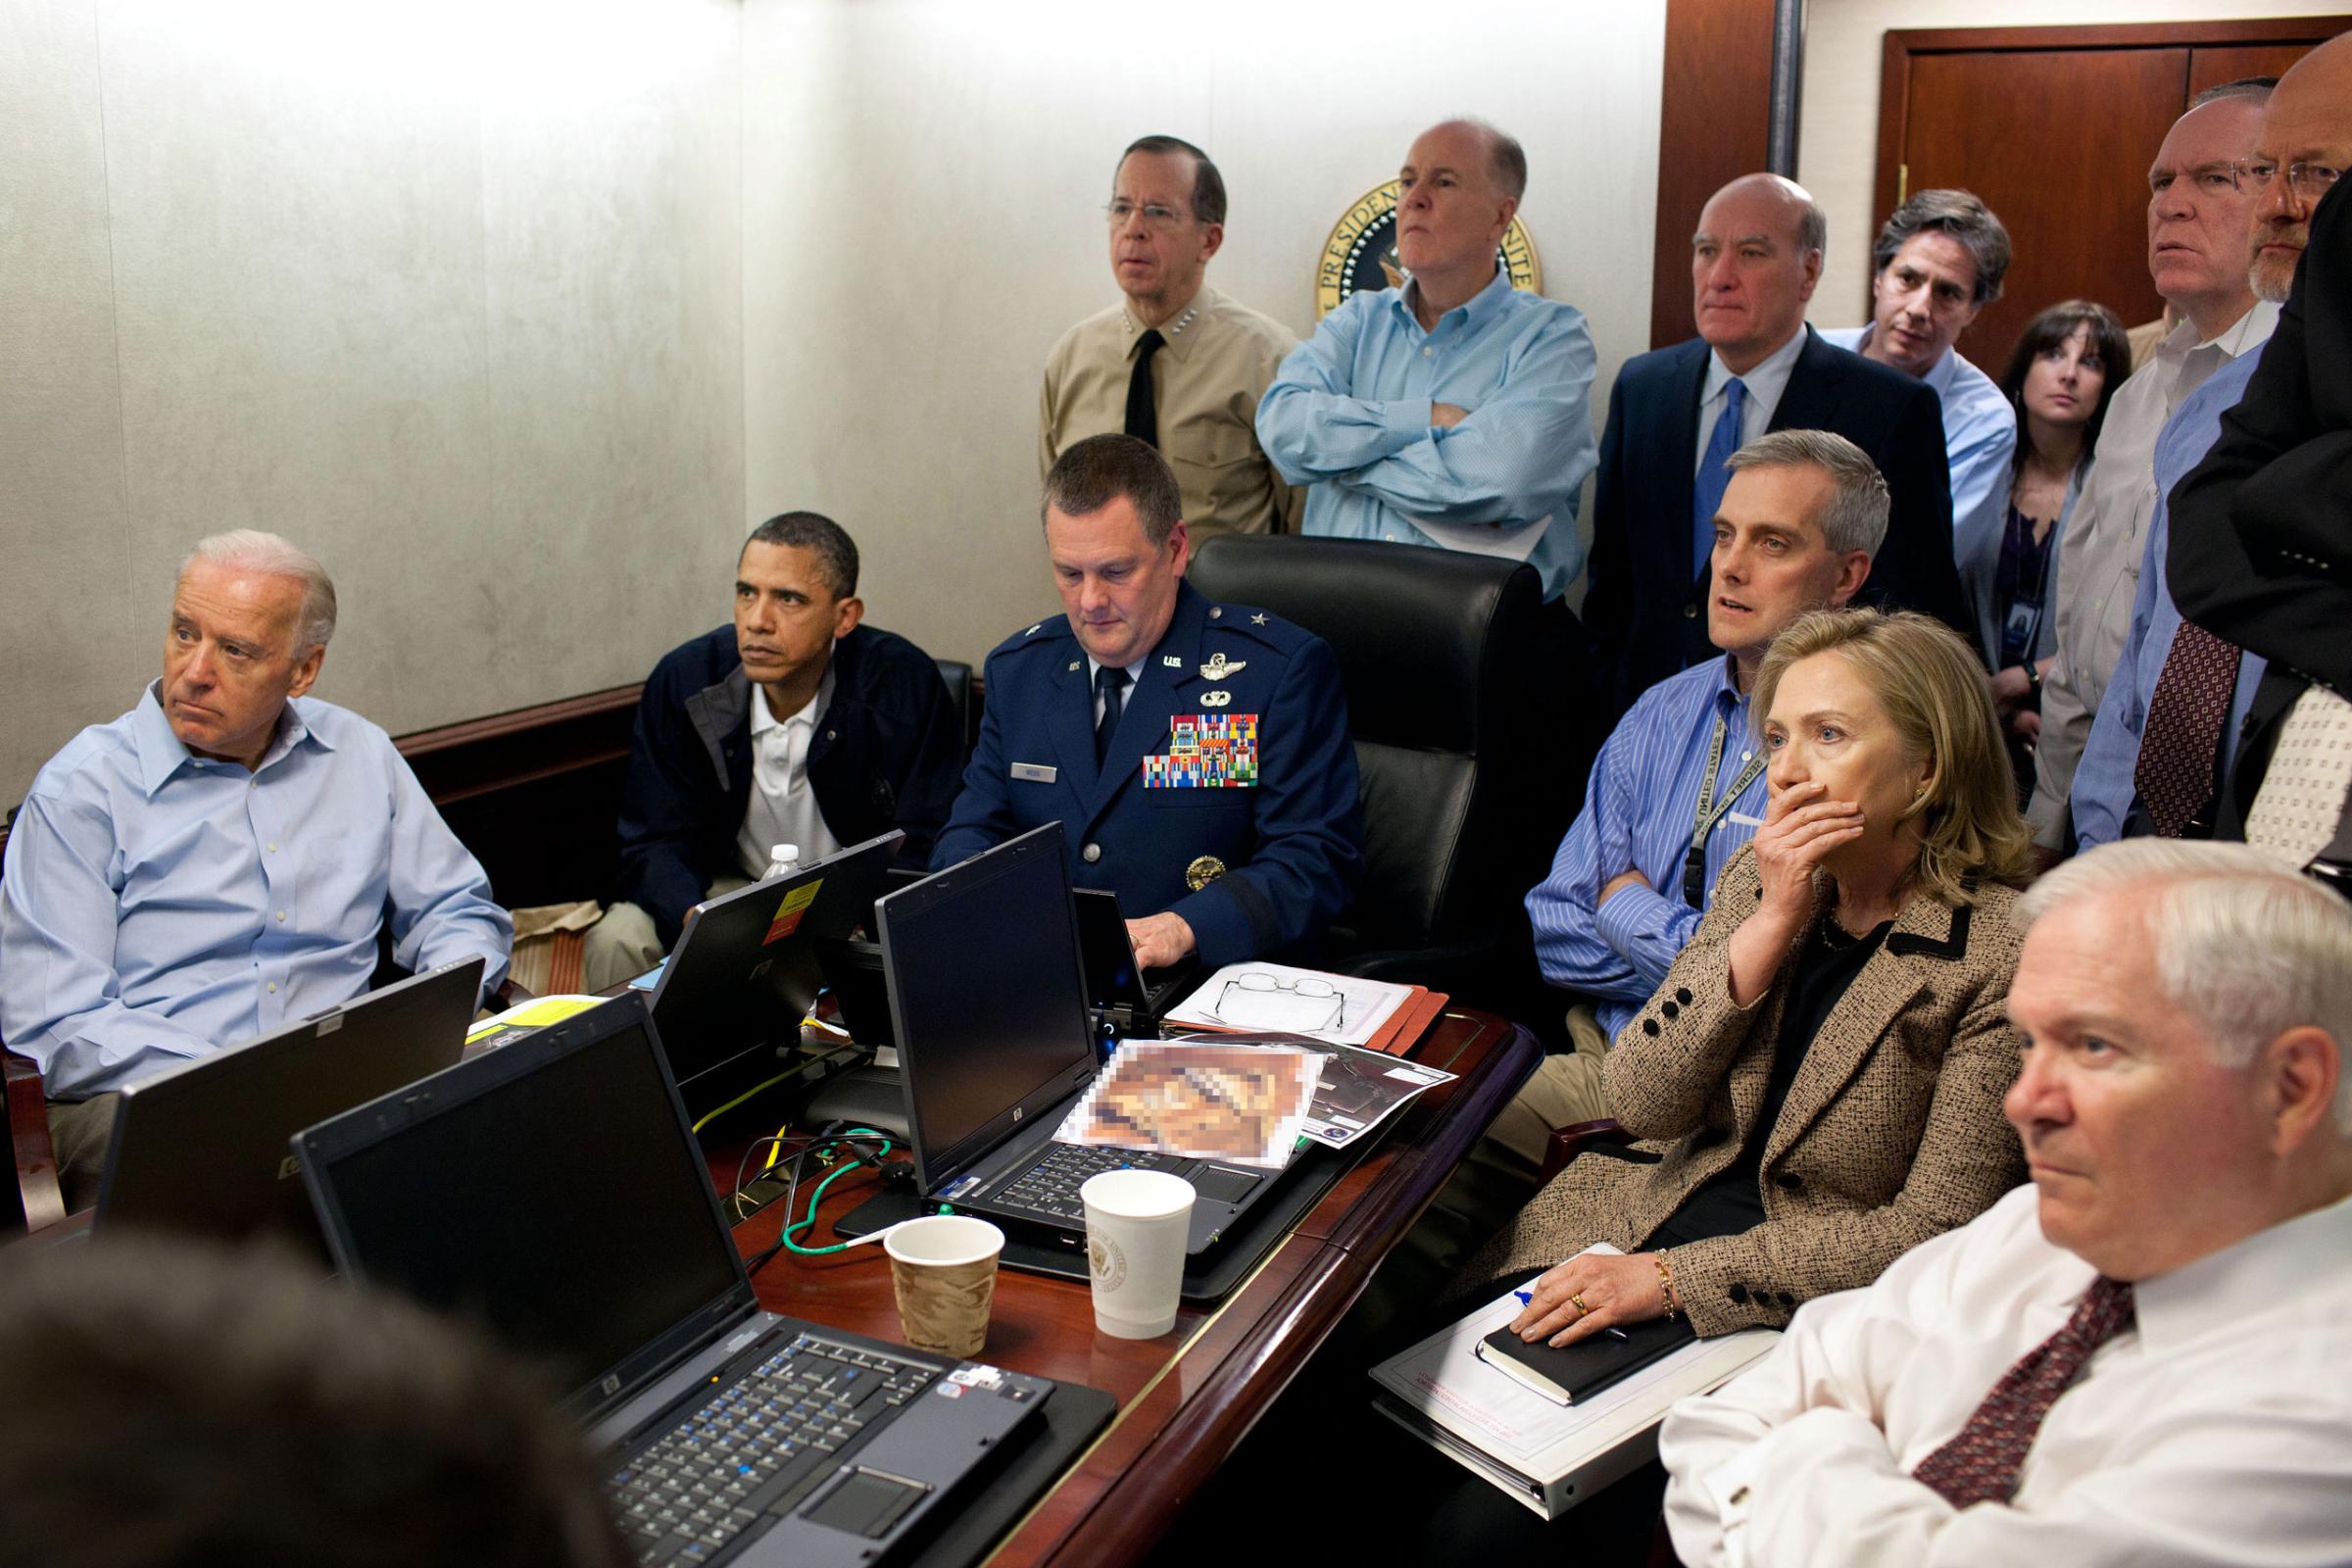 President Obama Announces Death of Osama Bin Laden